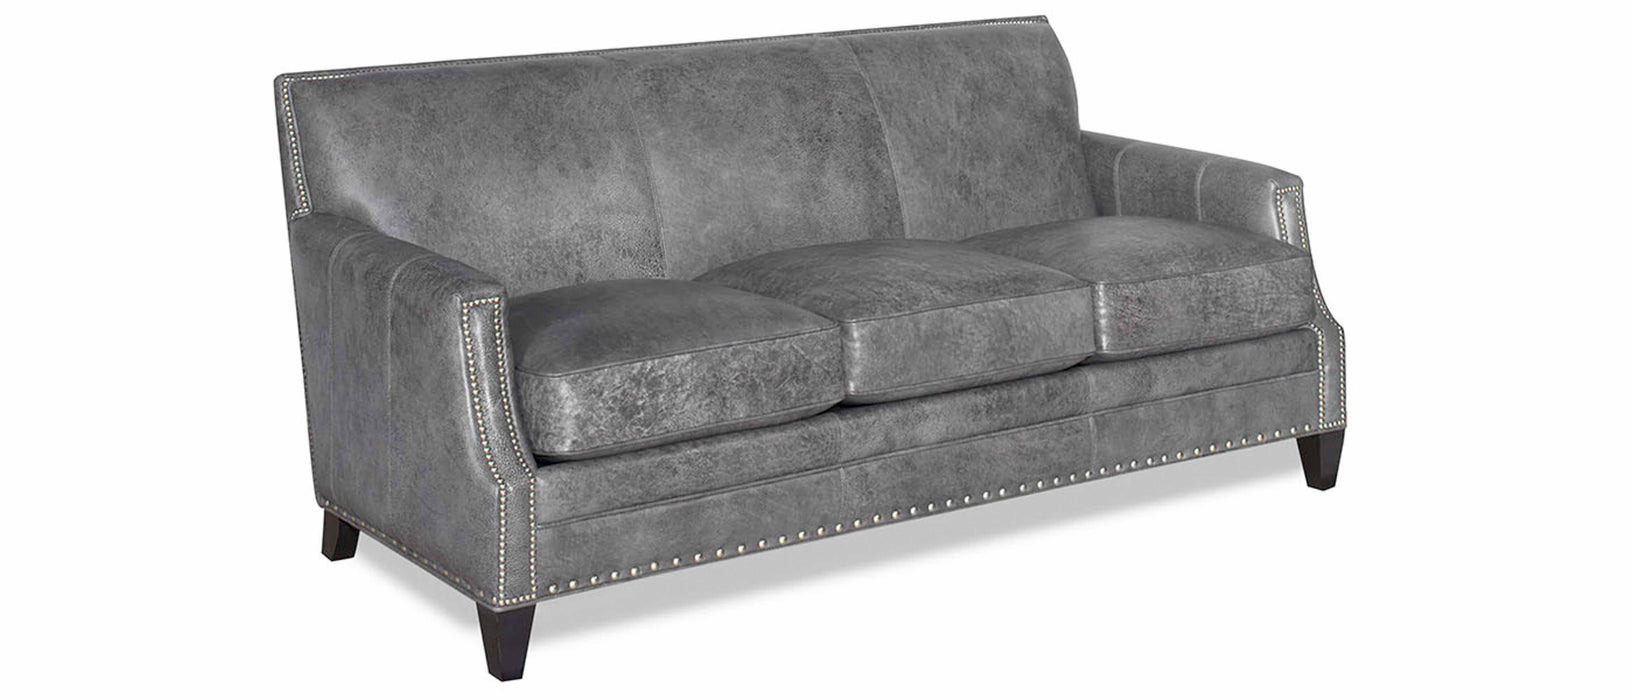 Mills Leather Sofa